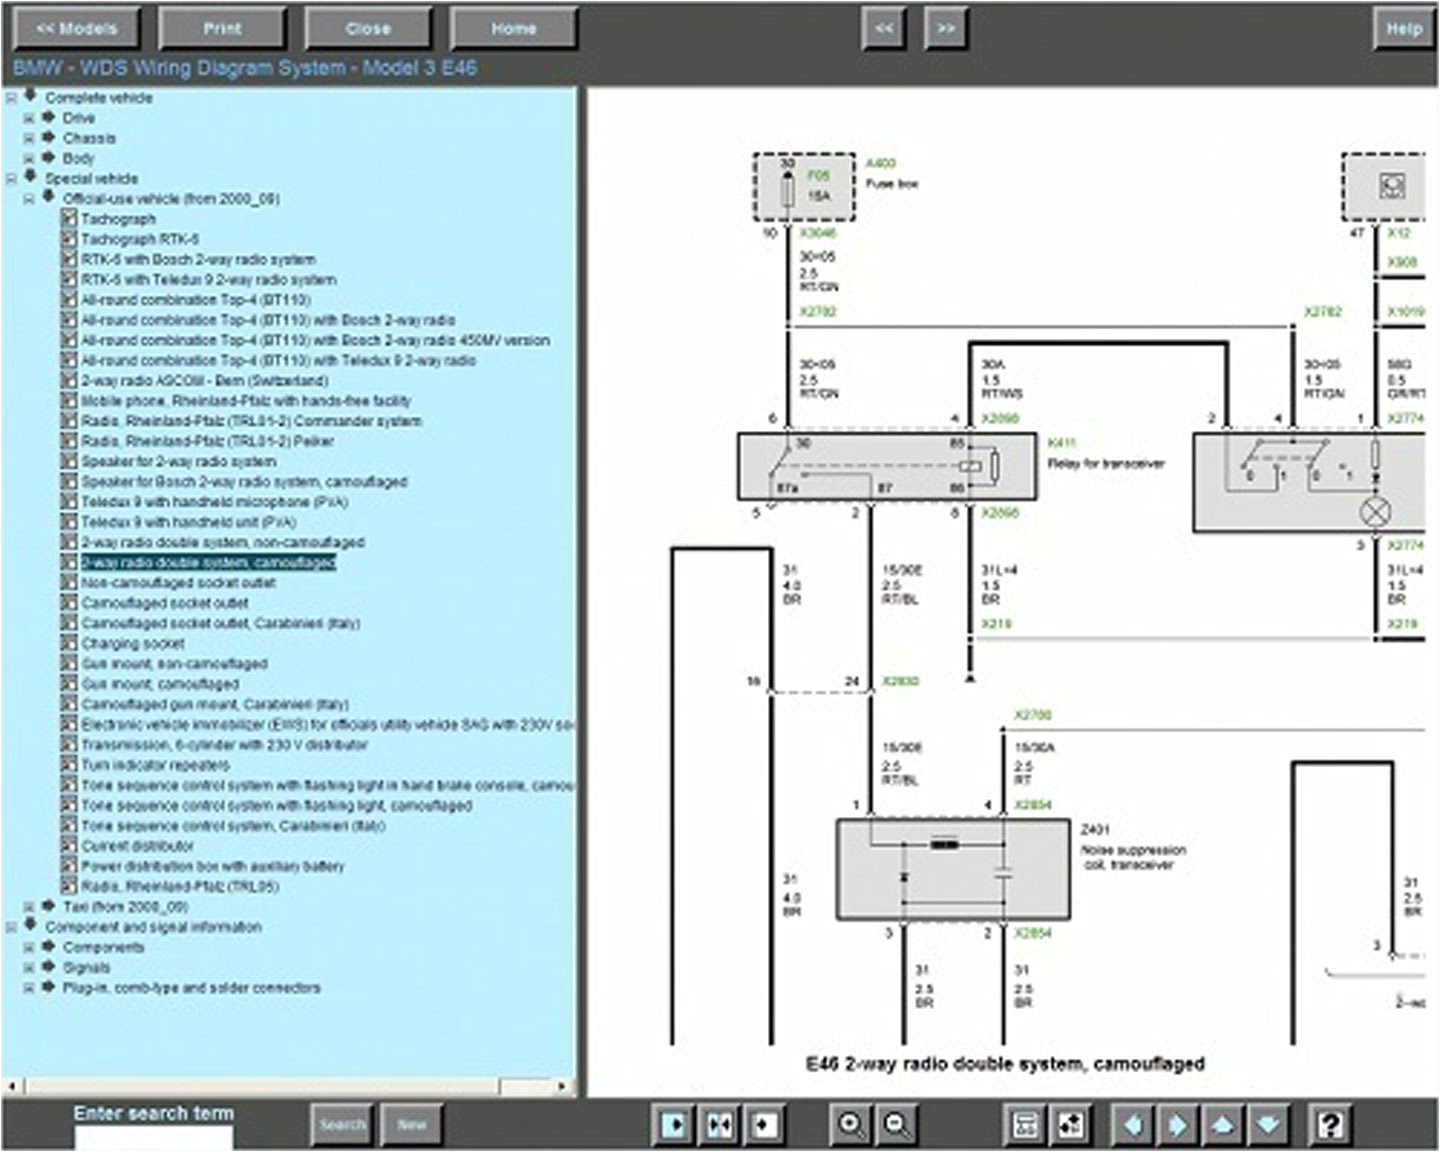 bmw wds wiring diagram system wiring diagram show bmw wiring diagram system wds deutsch bmw wiring diagram system